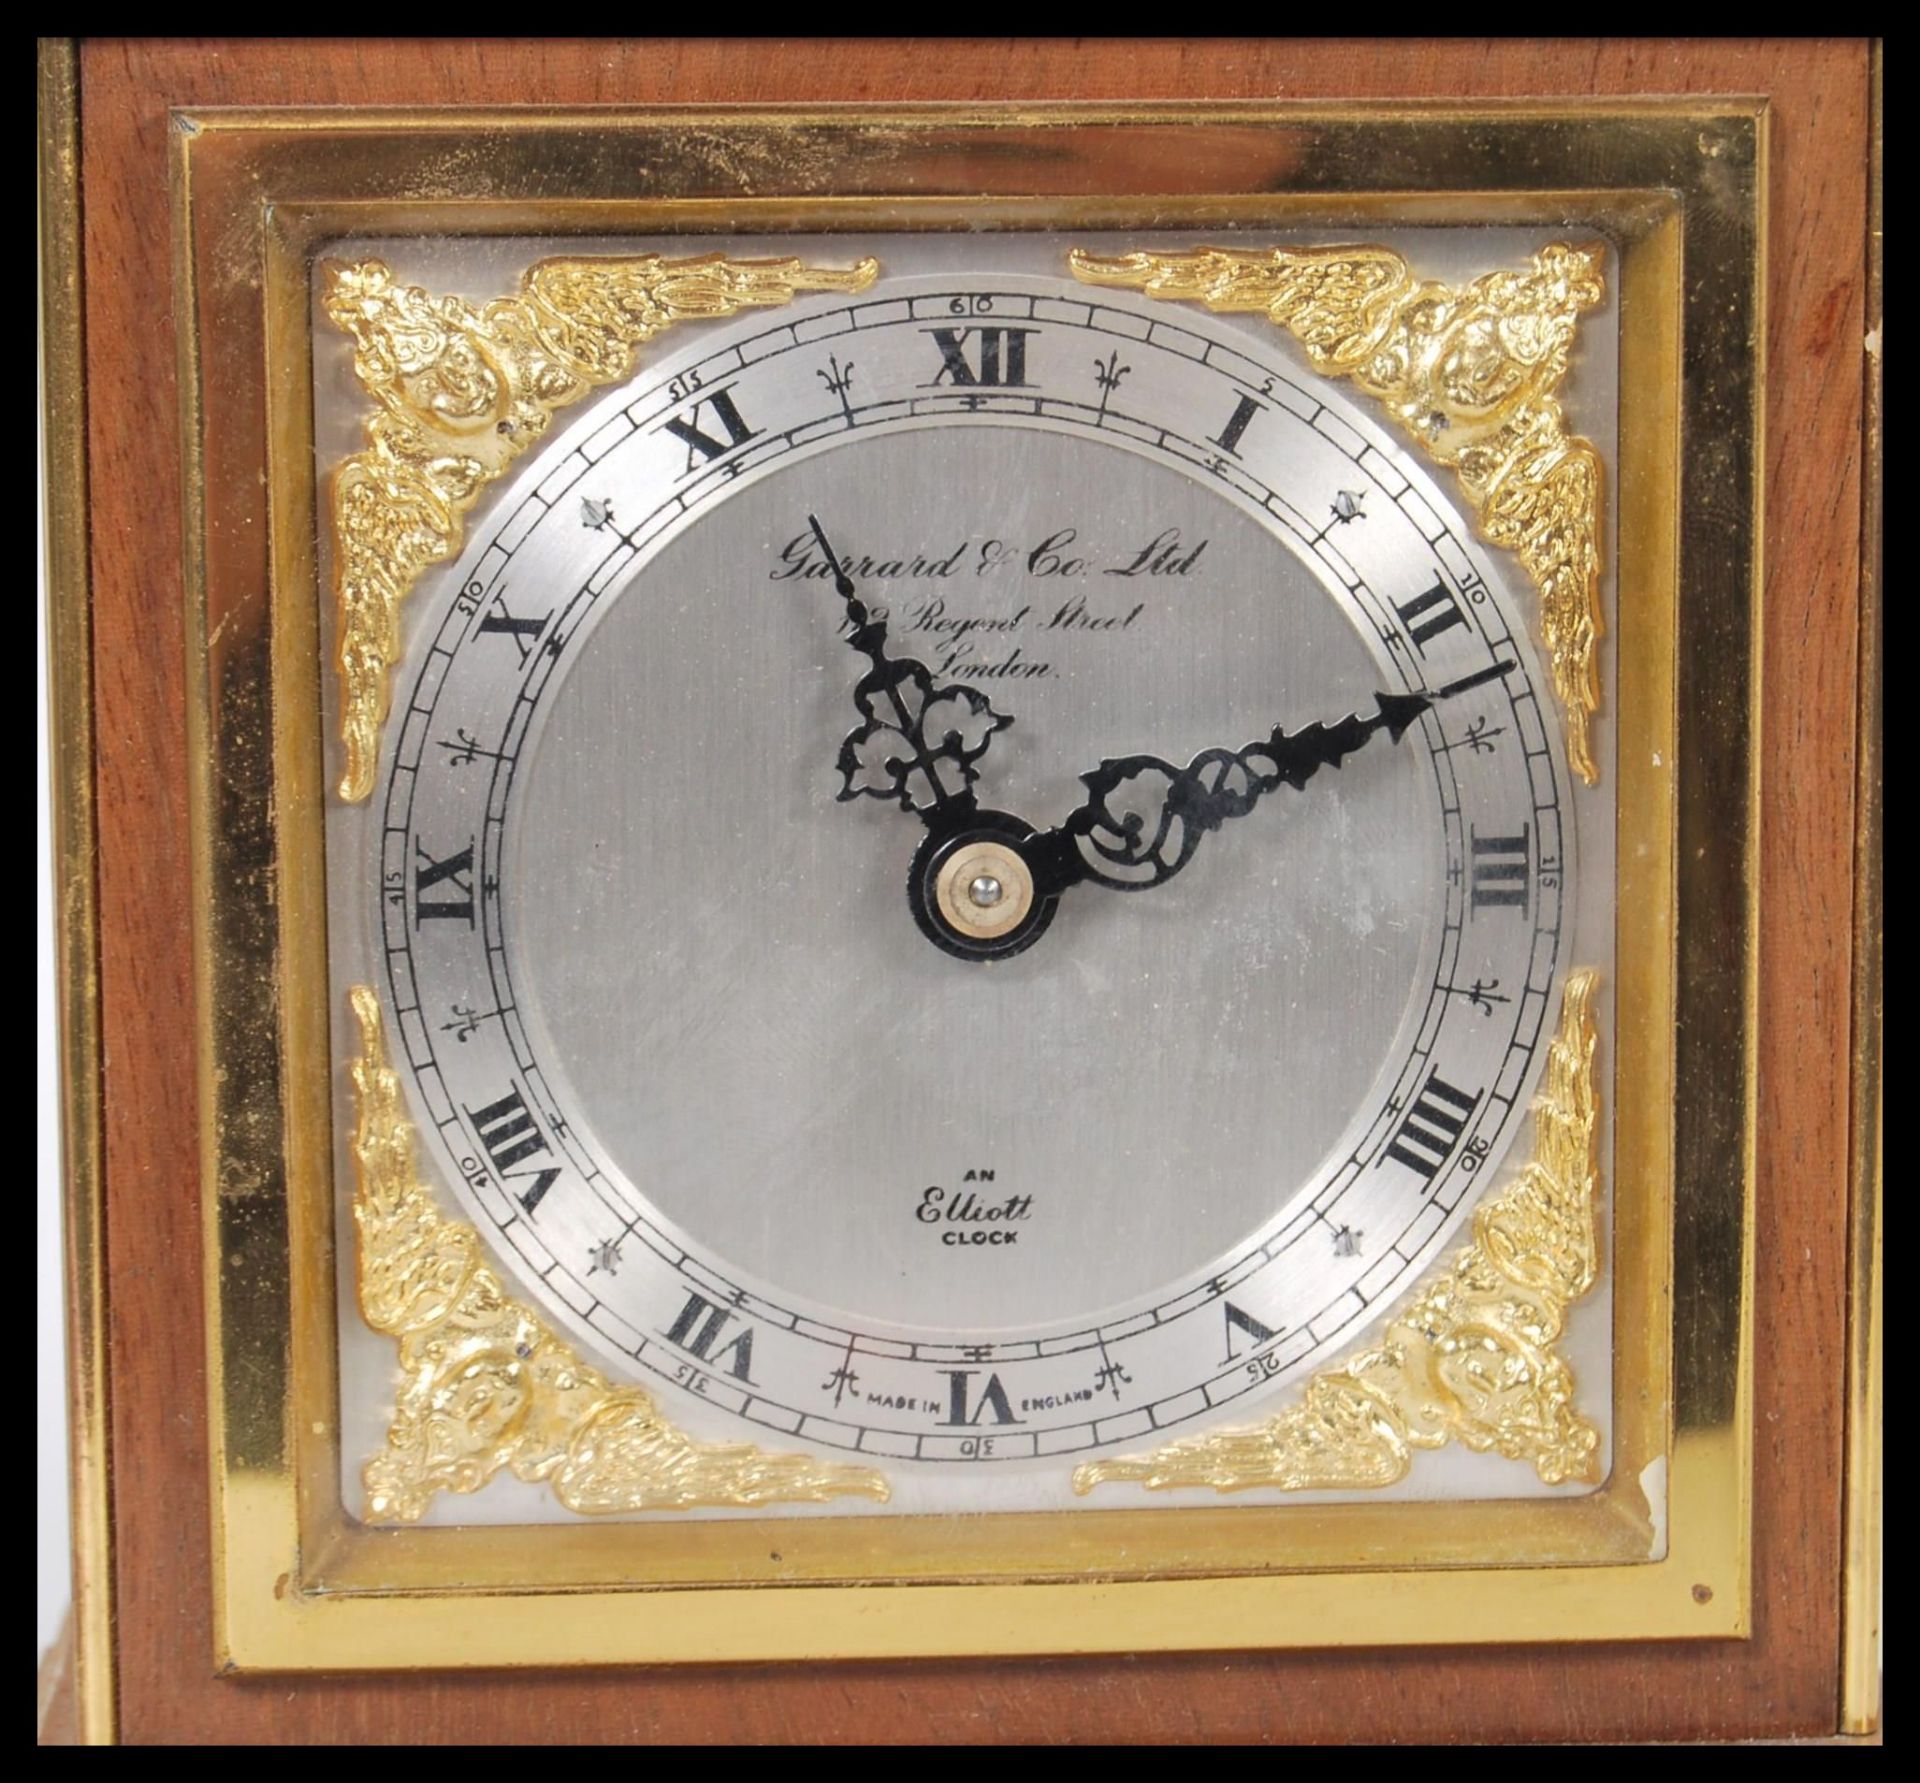 A 20th Century Elliot mantel clock retailed by Garrard & Co Ltd, having a silvered face with roman - Bild 2 aus 3